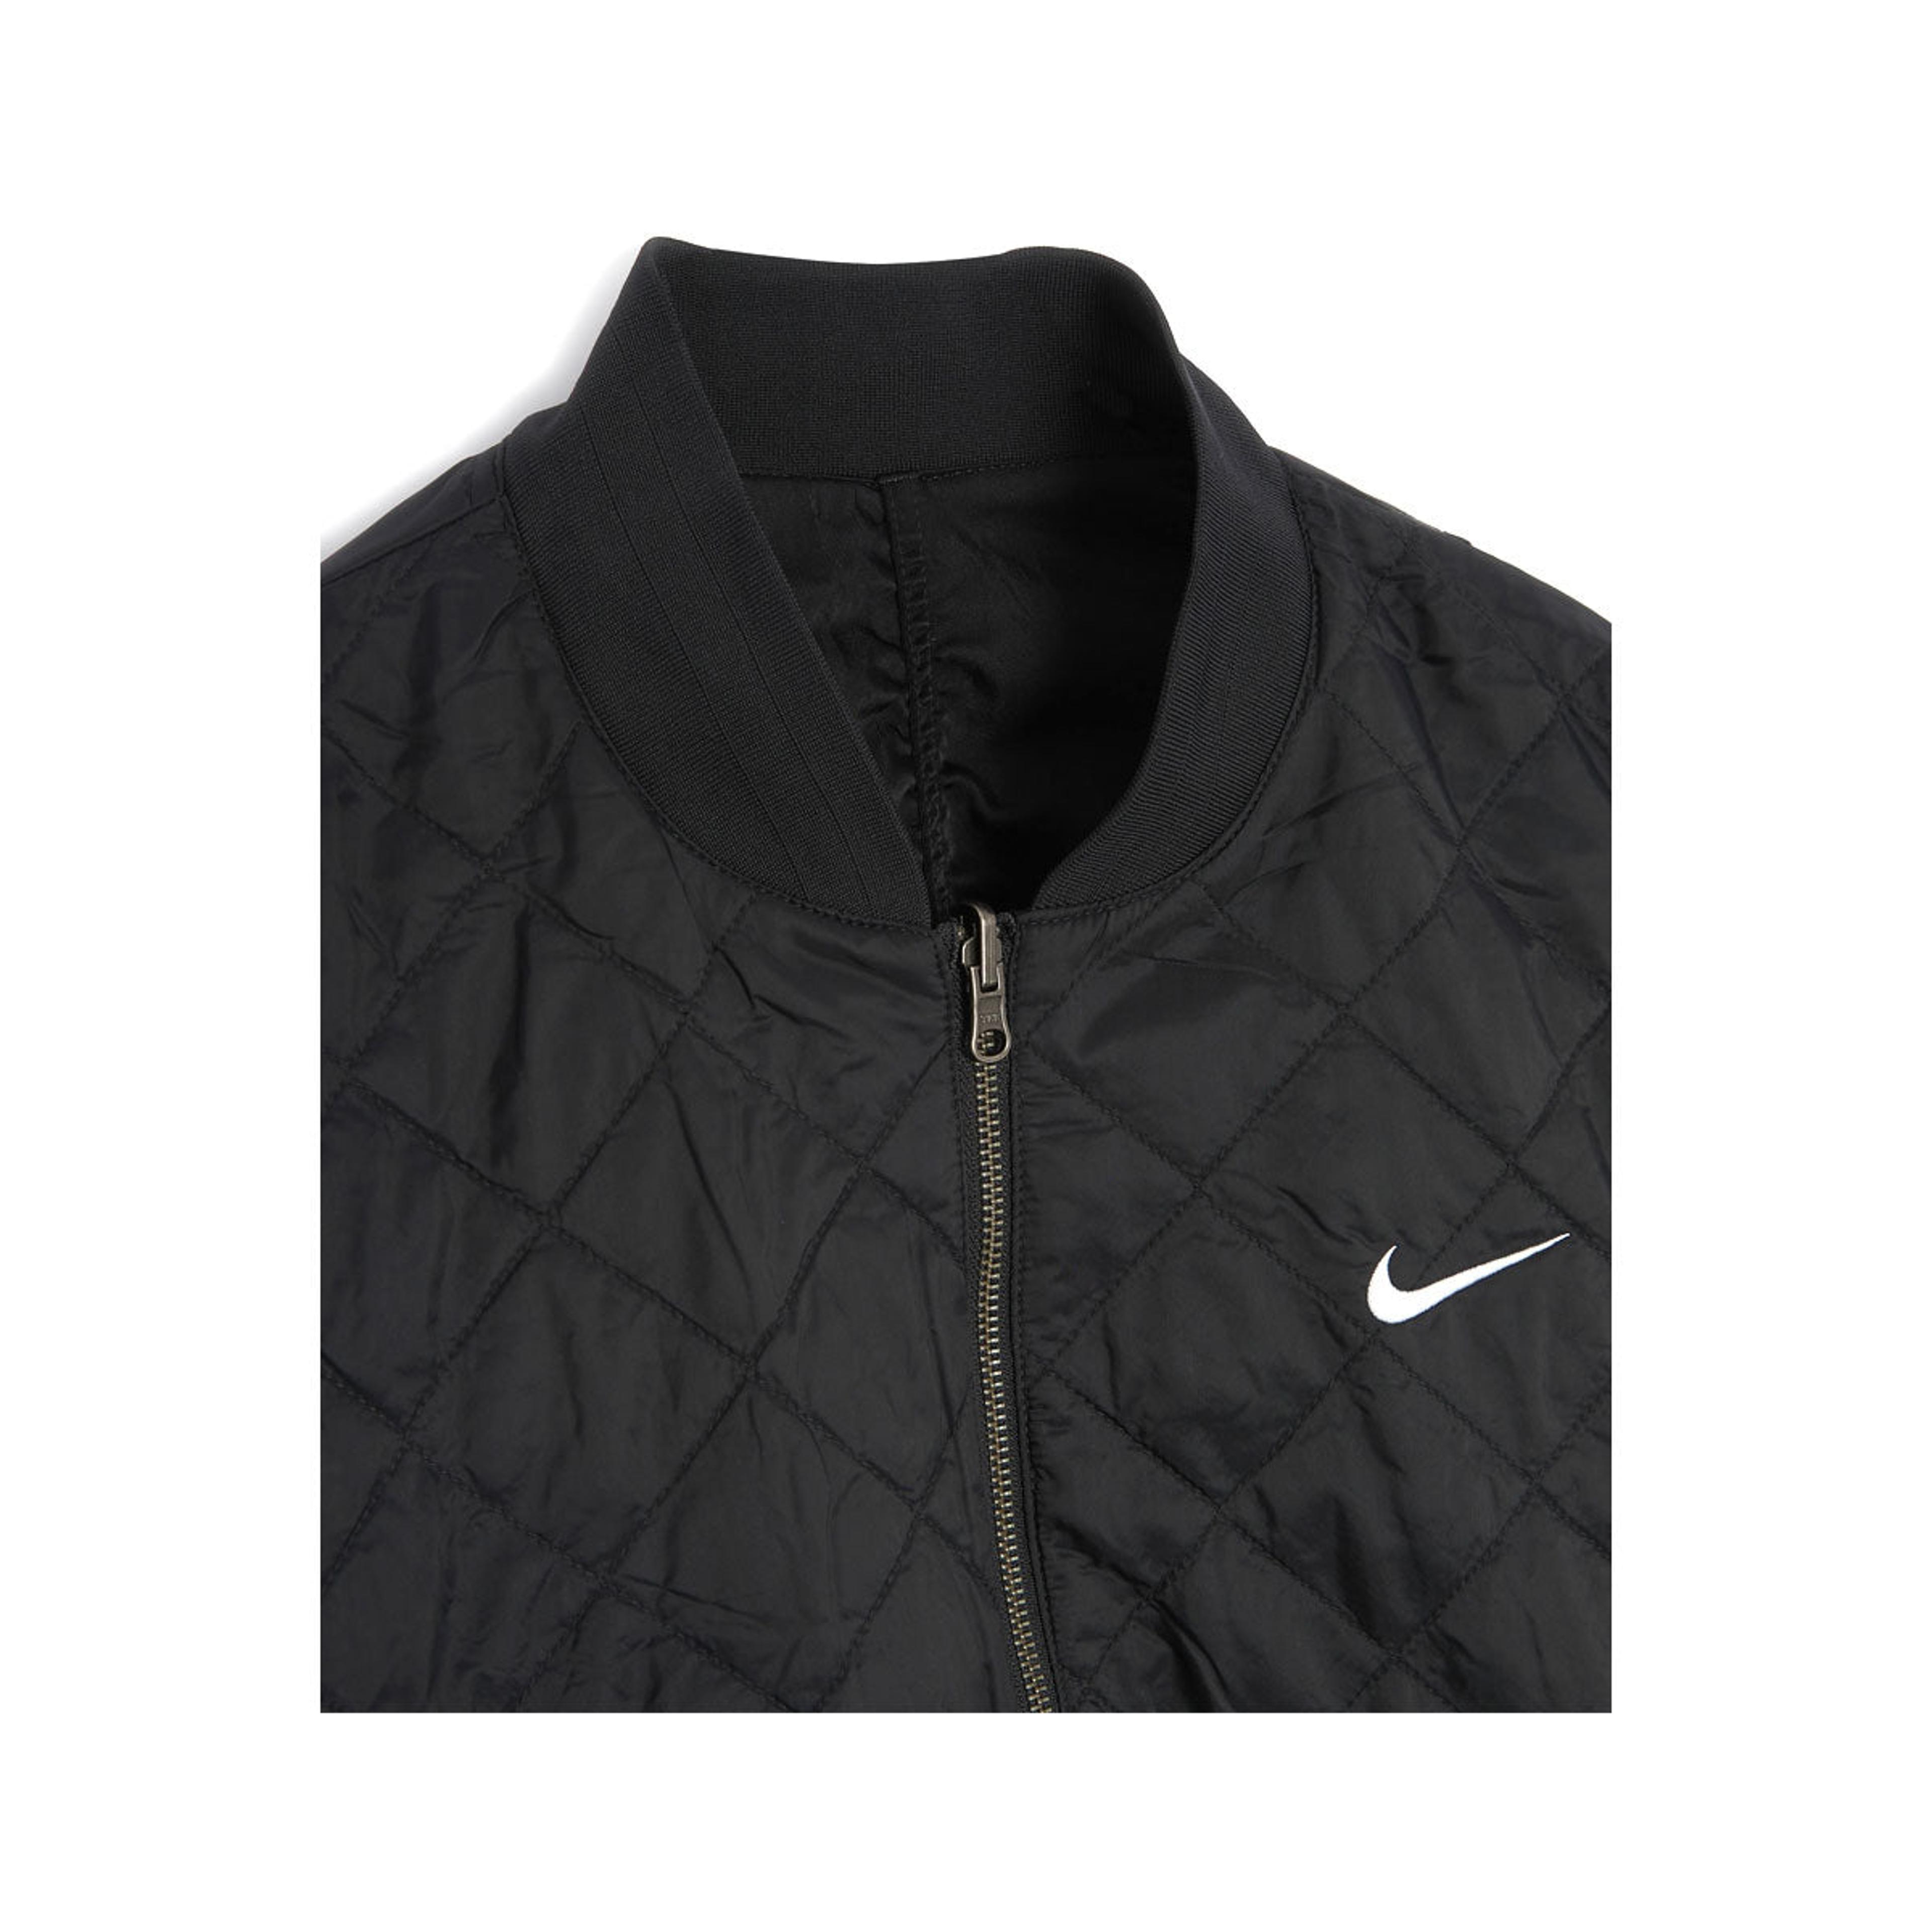 Alternate View 2 of Nike Sportswear Women's Reversible Varsity Bomber Jacket